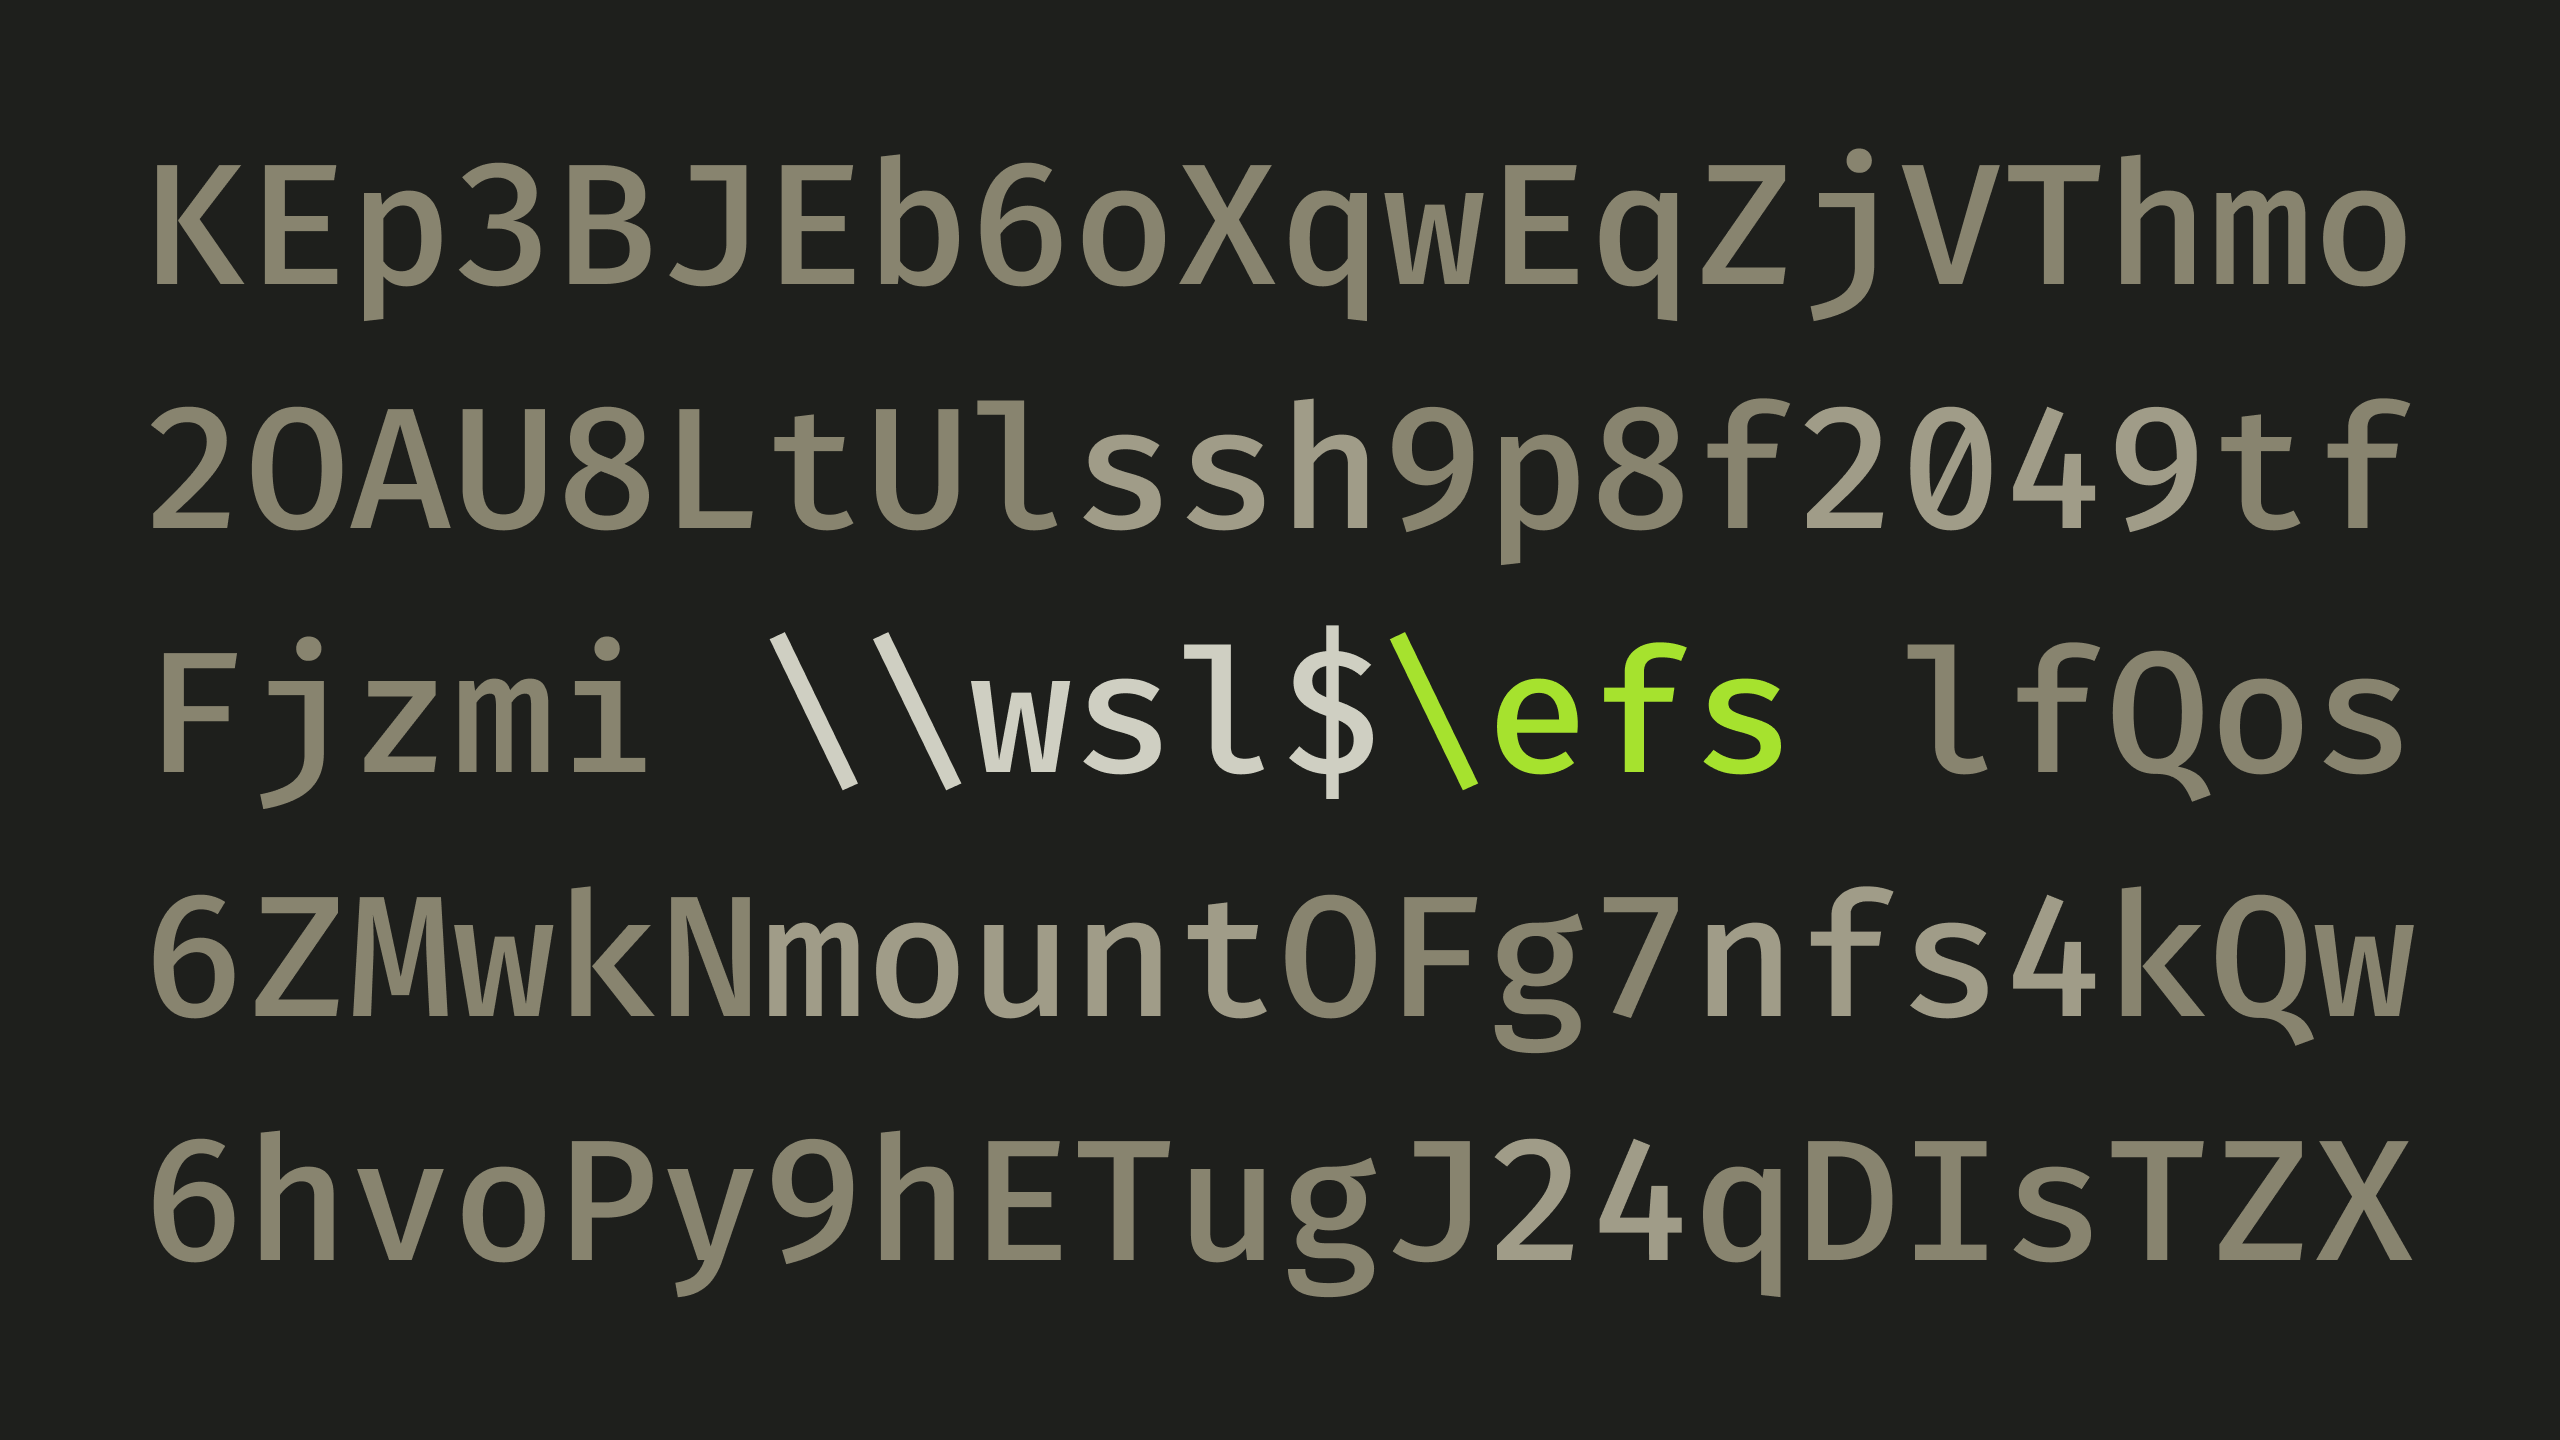 Random characters surrounding the "\\wsl$\efs" file explorer path.